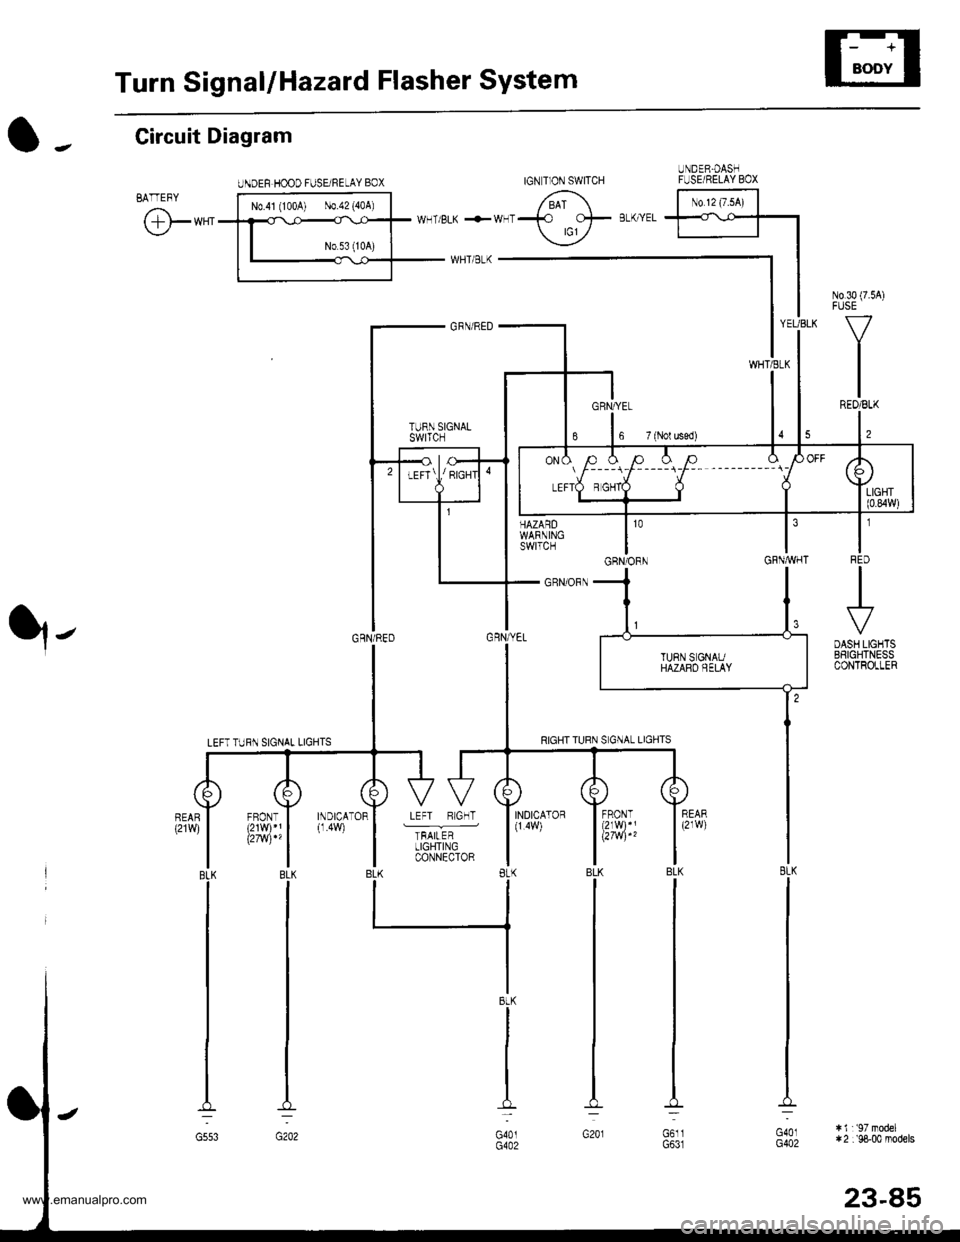 HONDA CR-V 1998 RD1-RD3 / 1.G Workshop Manual 
Turn SignallHazard Flasher System
UNDEF HOOD FUSE/NELAY BOX
N0.30 (7.54)FUSE
V
IREO/BLK
l,
tIFqD
.+
DASH LIGHTSBSIGHTNESSCONTROLLER
HAZARDWARNINGswtTcH
_ GRN/ORN
YEUBLK
WHTiELK
GRNAVHT
O -. Circuit 